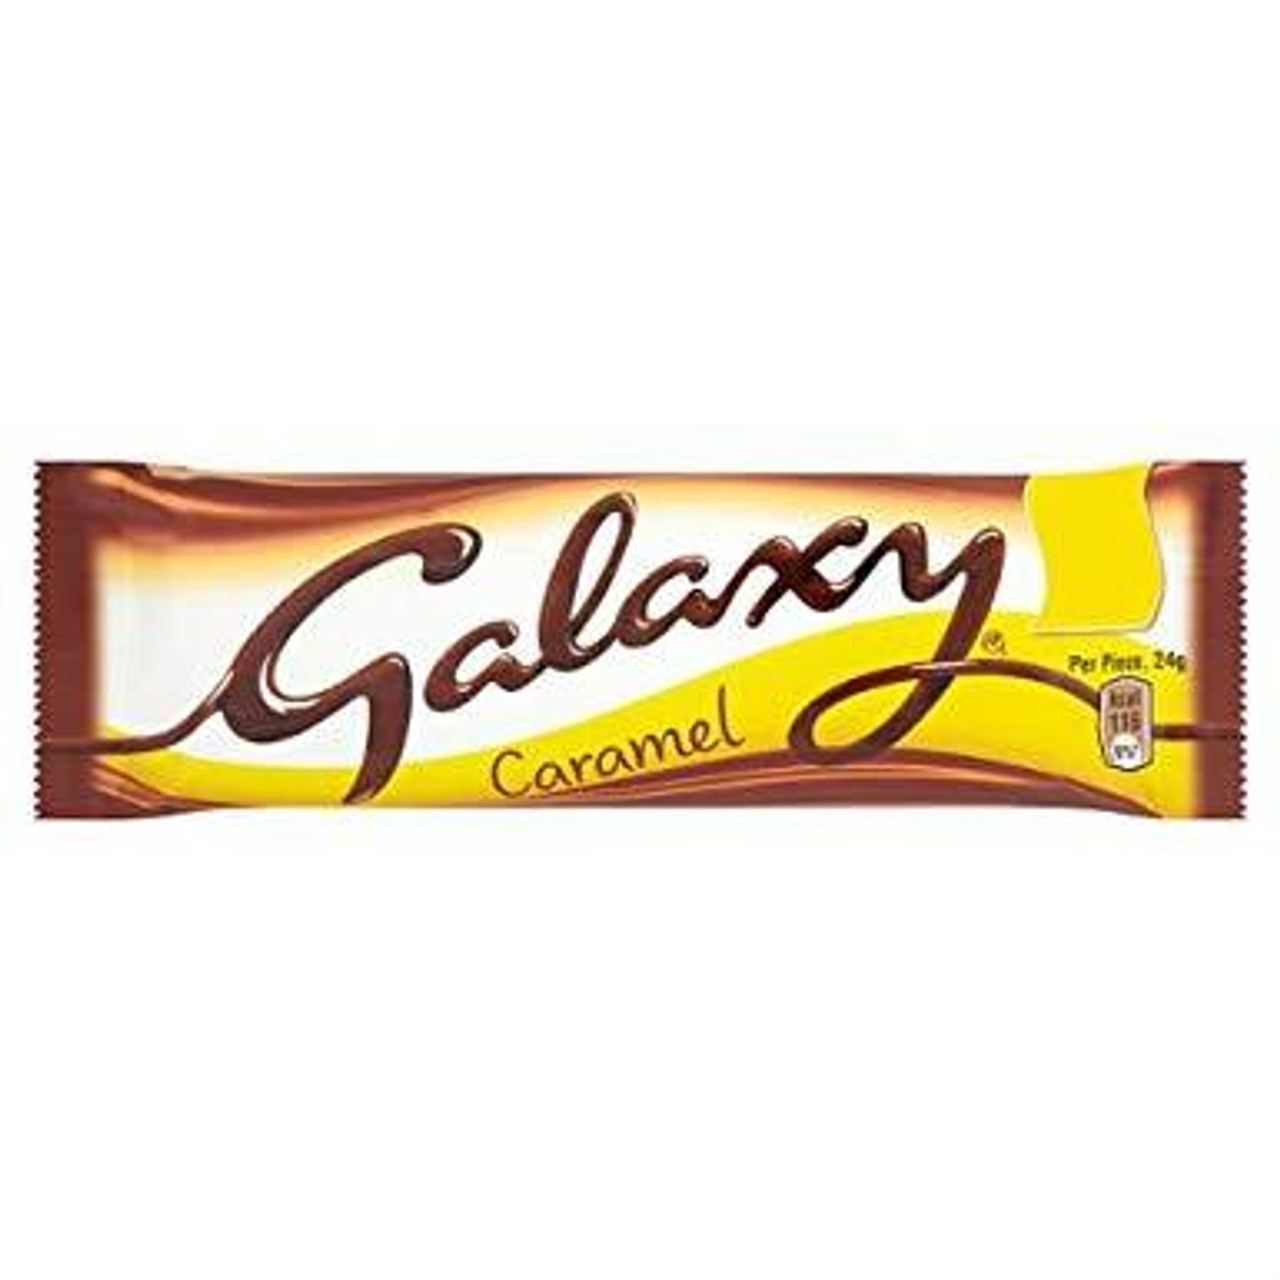 Mars - Galaxy Caramel, 48g